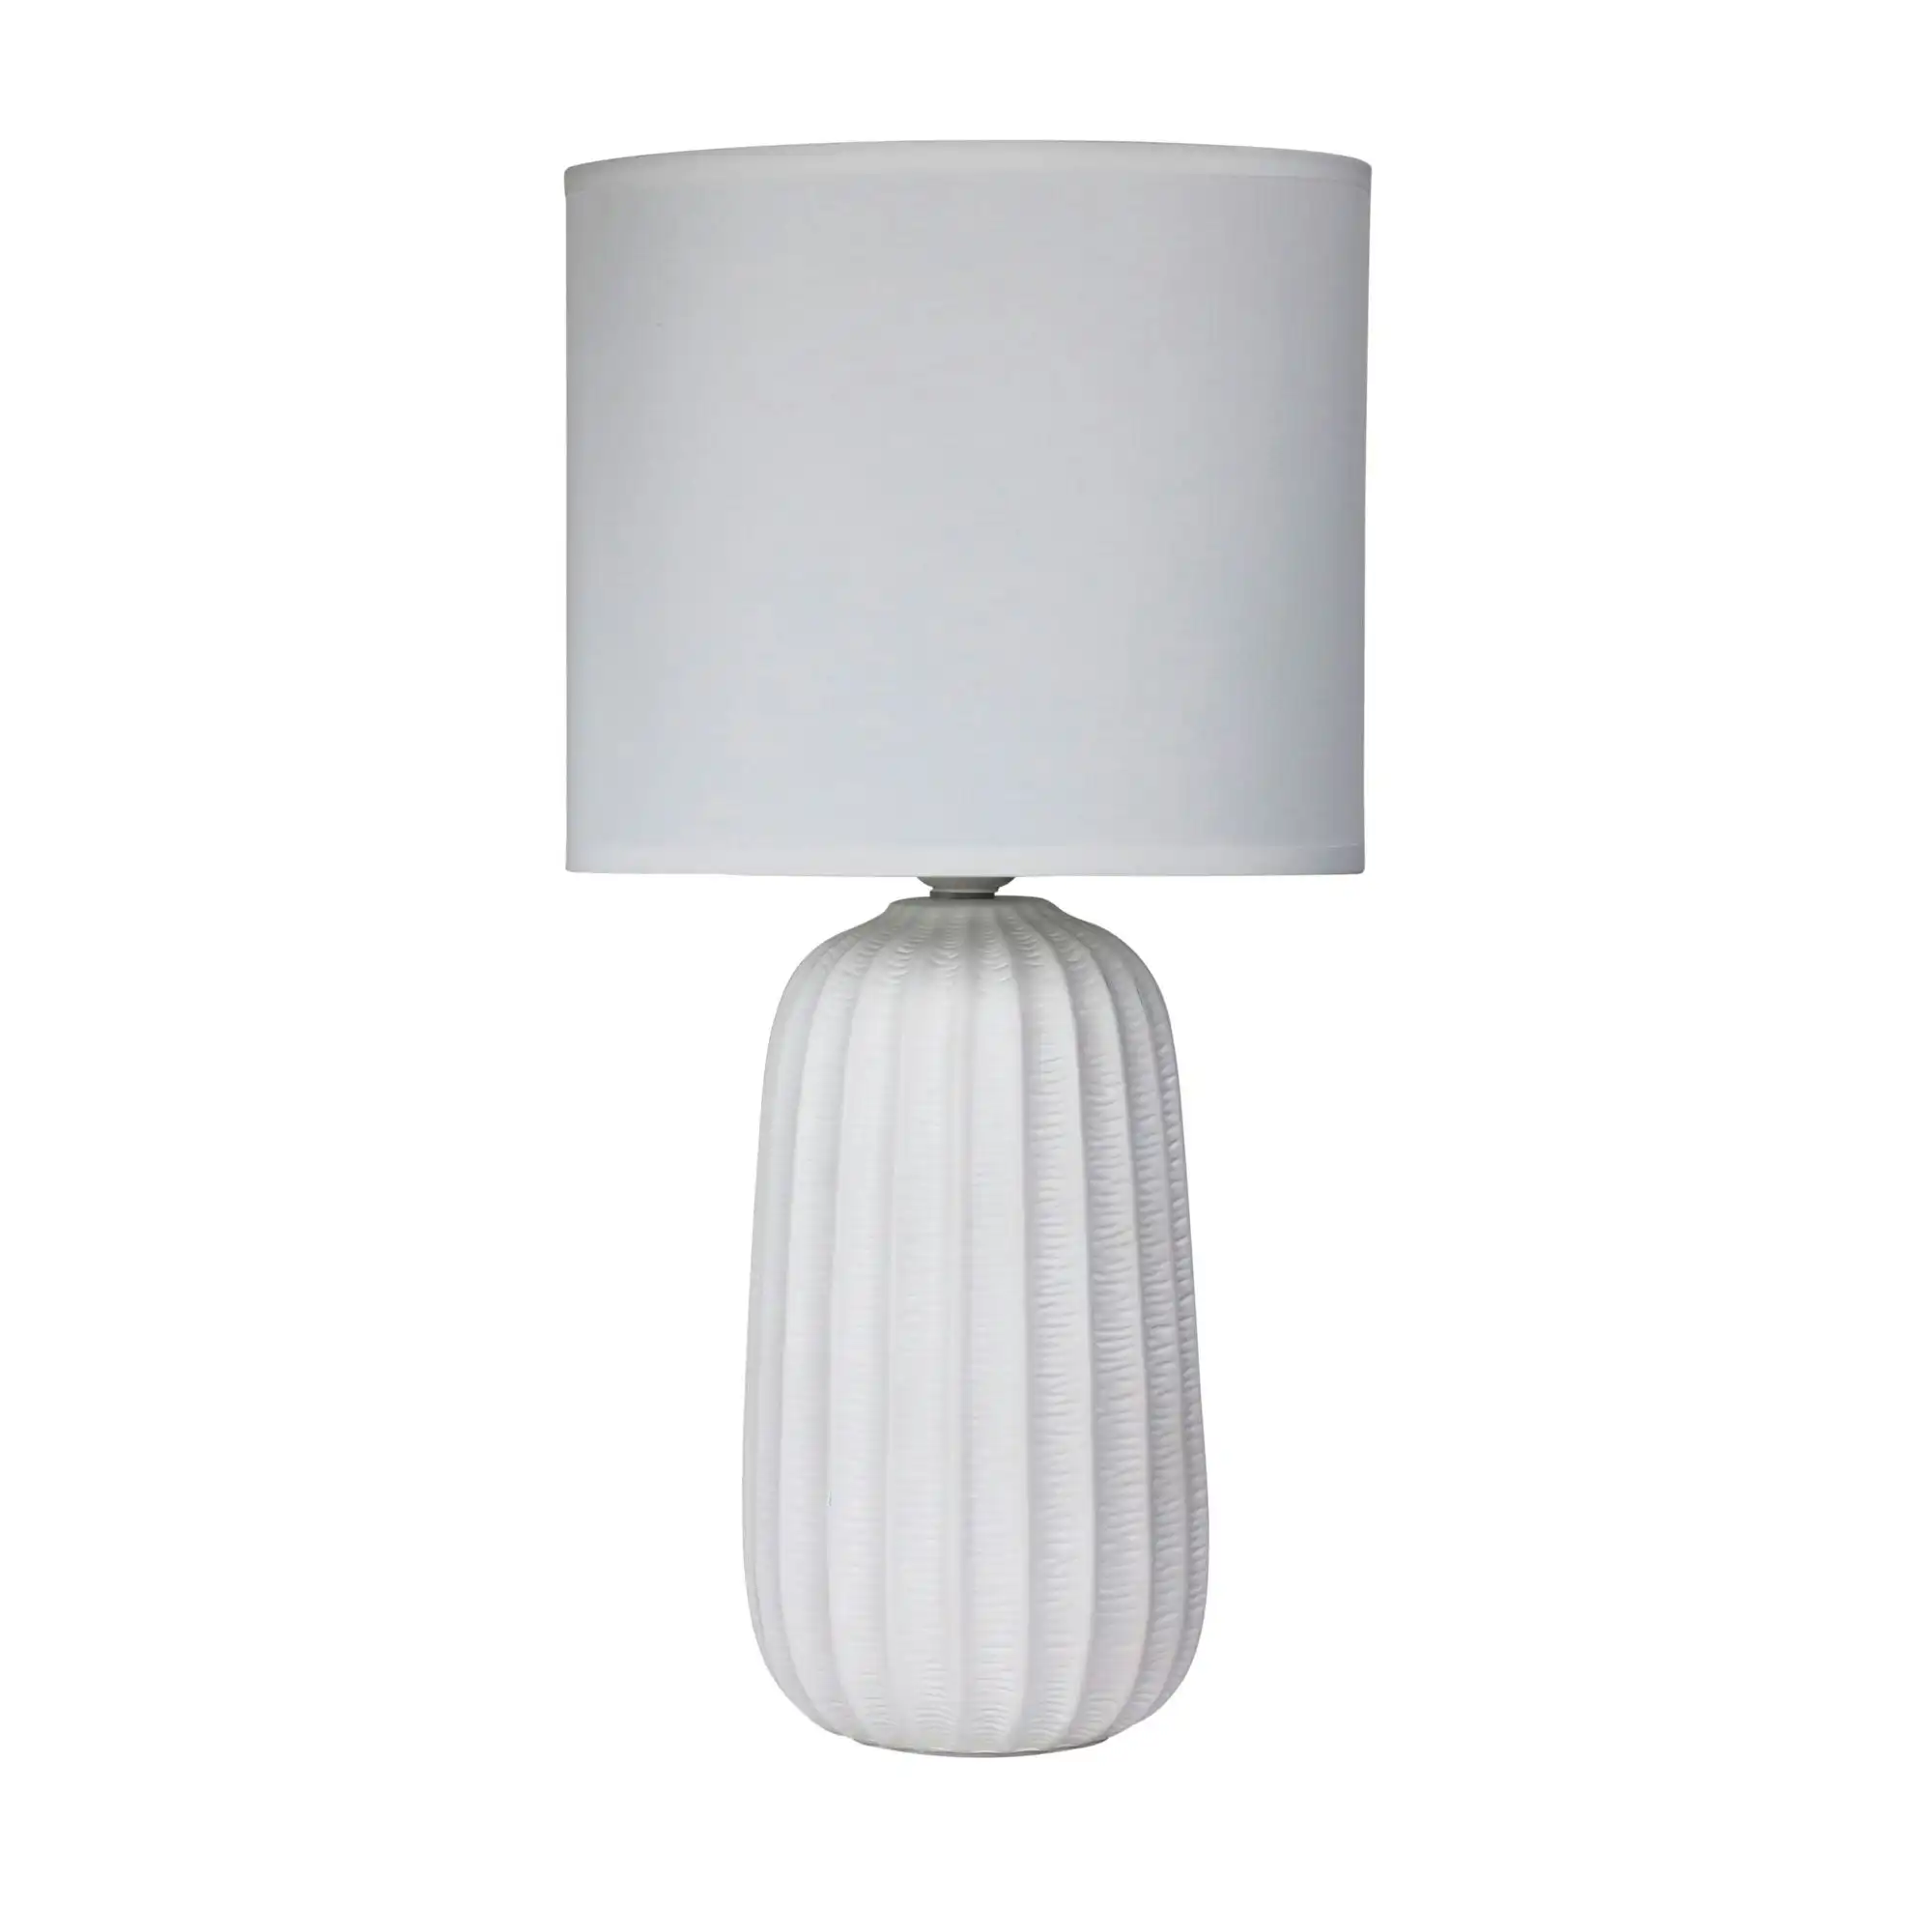 BENJY.25 White Ceramic Table Lamp